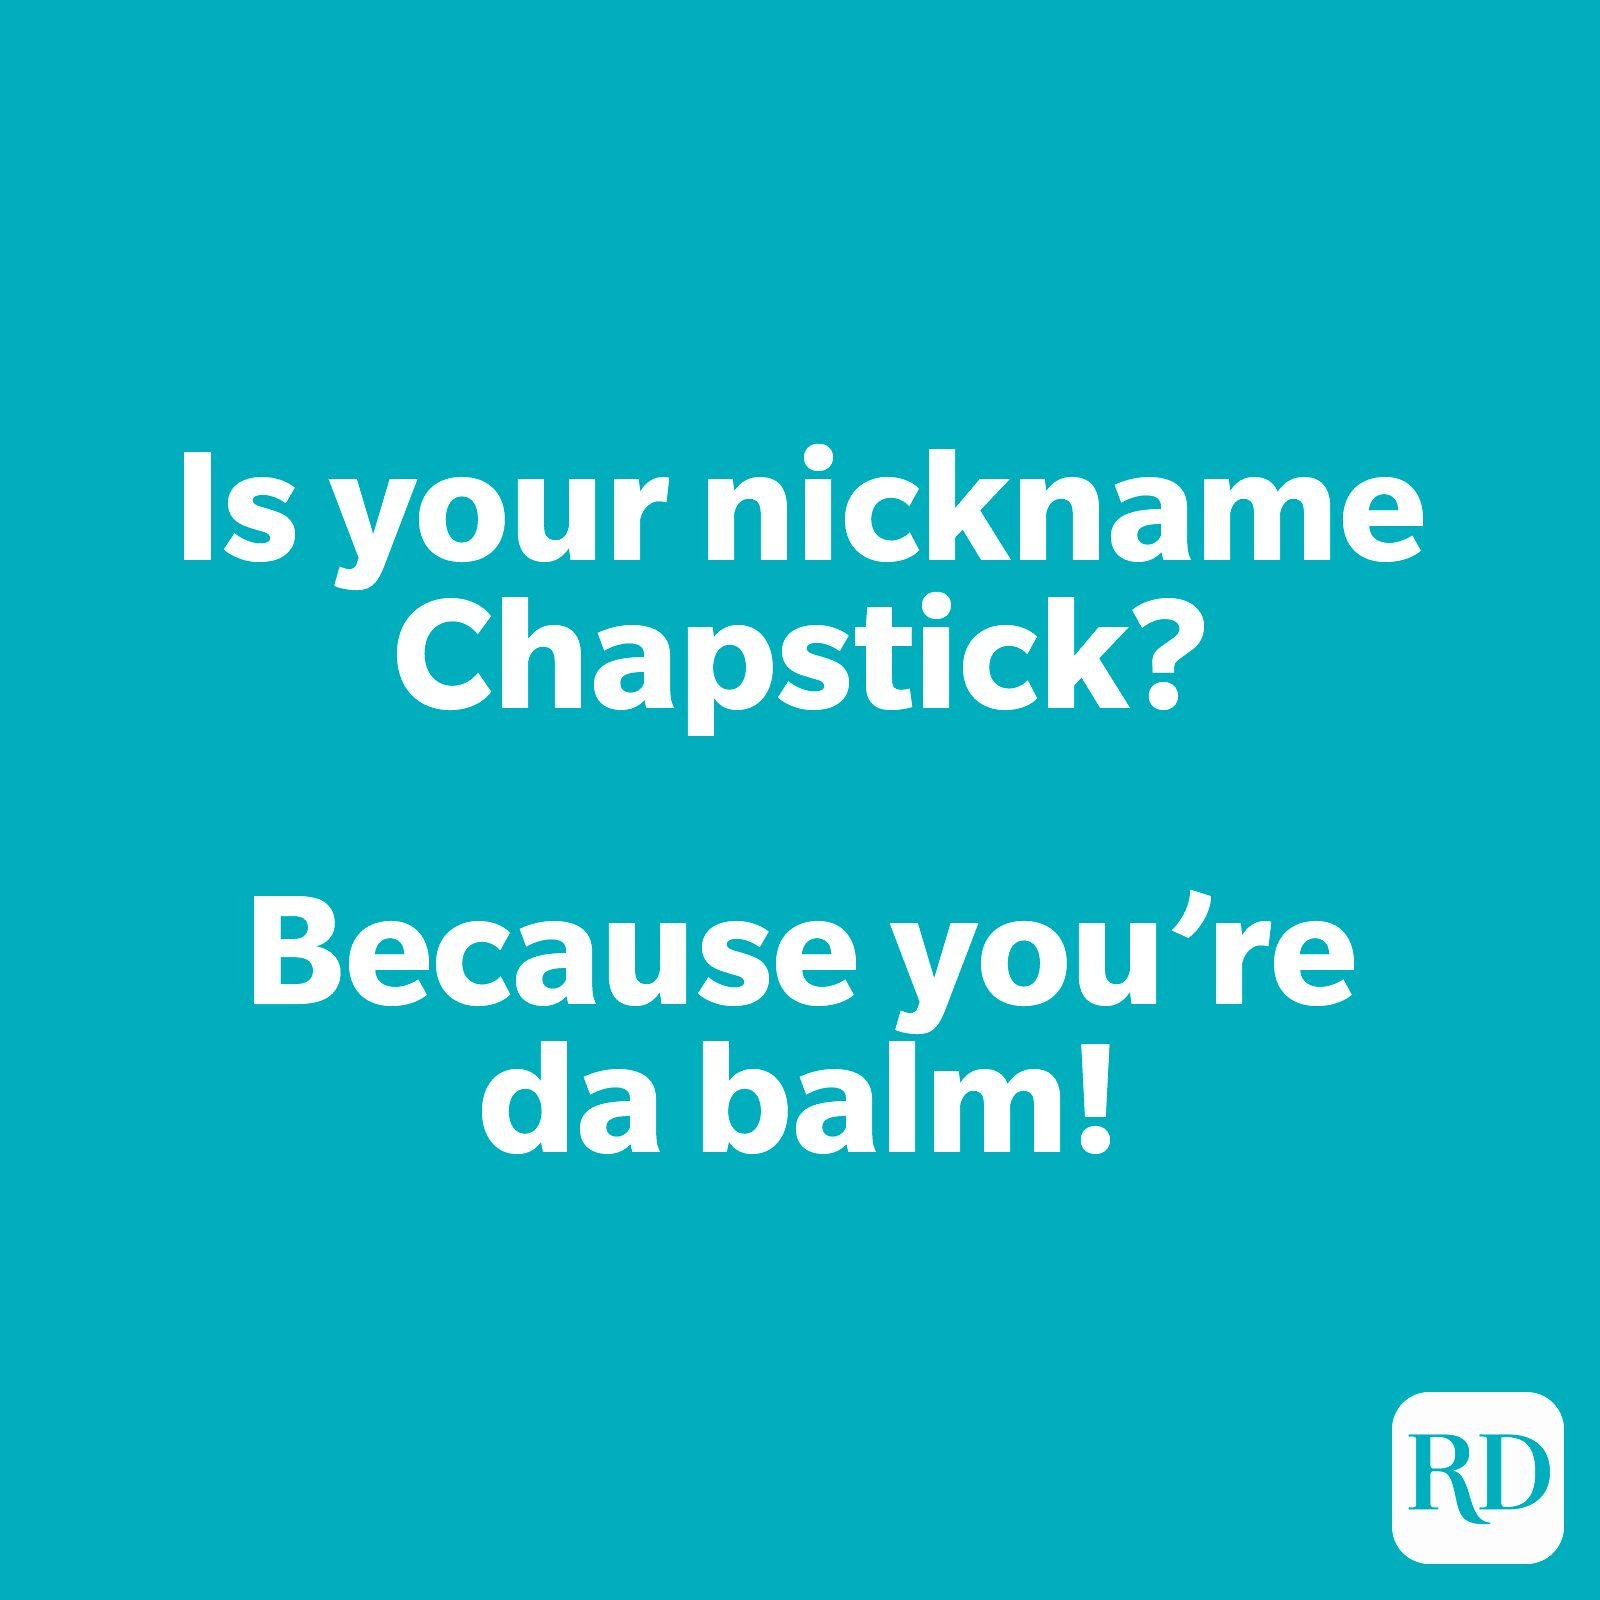 Is your nickname Chapstick? Because you’re da balm!